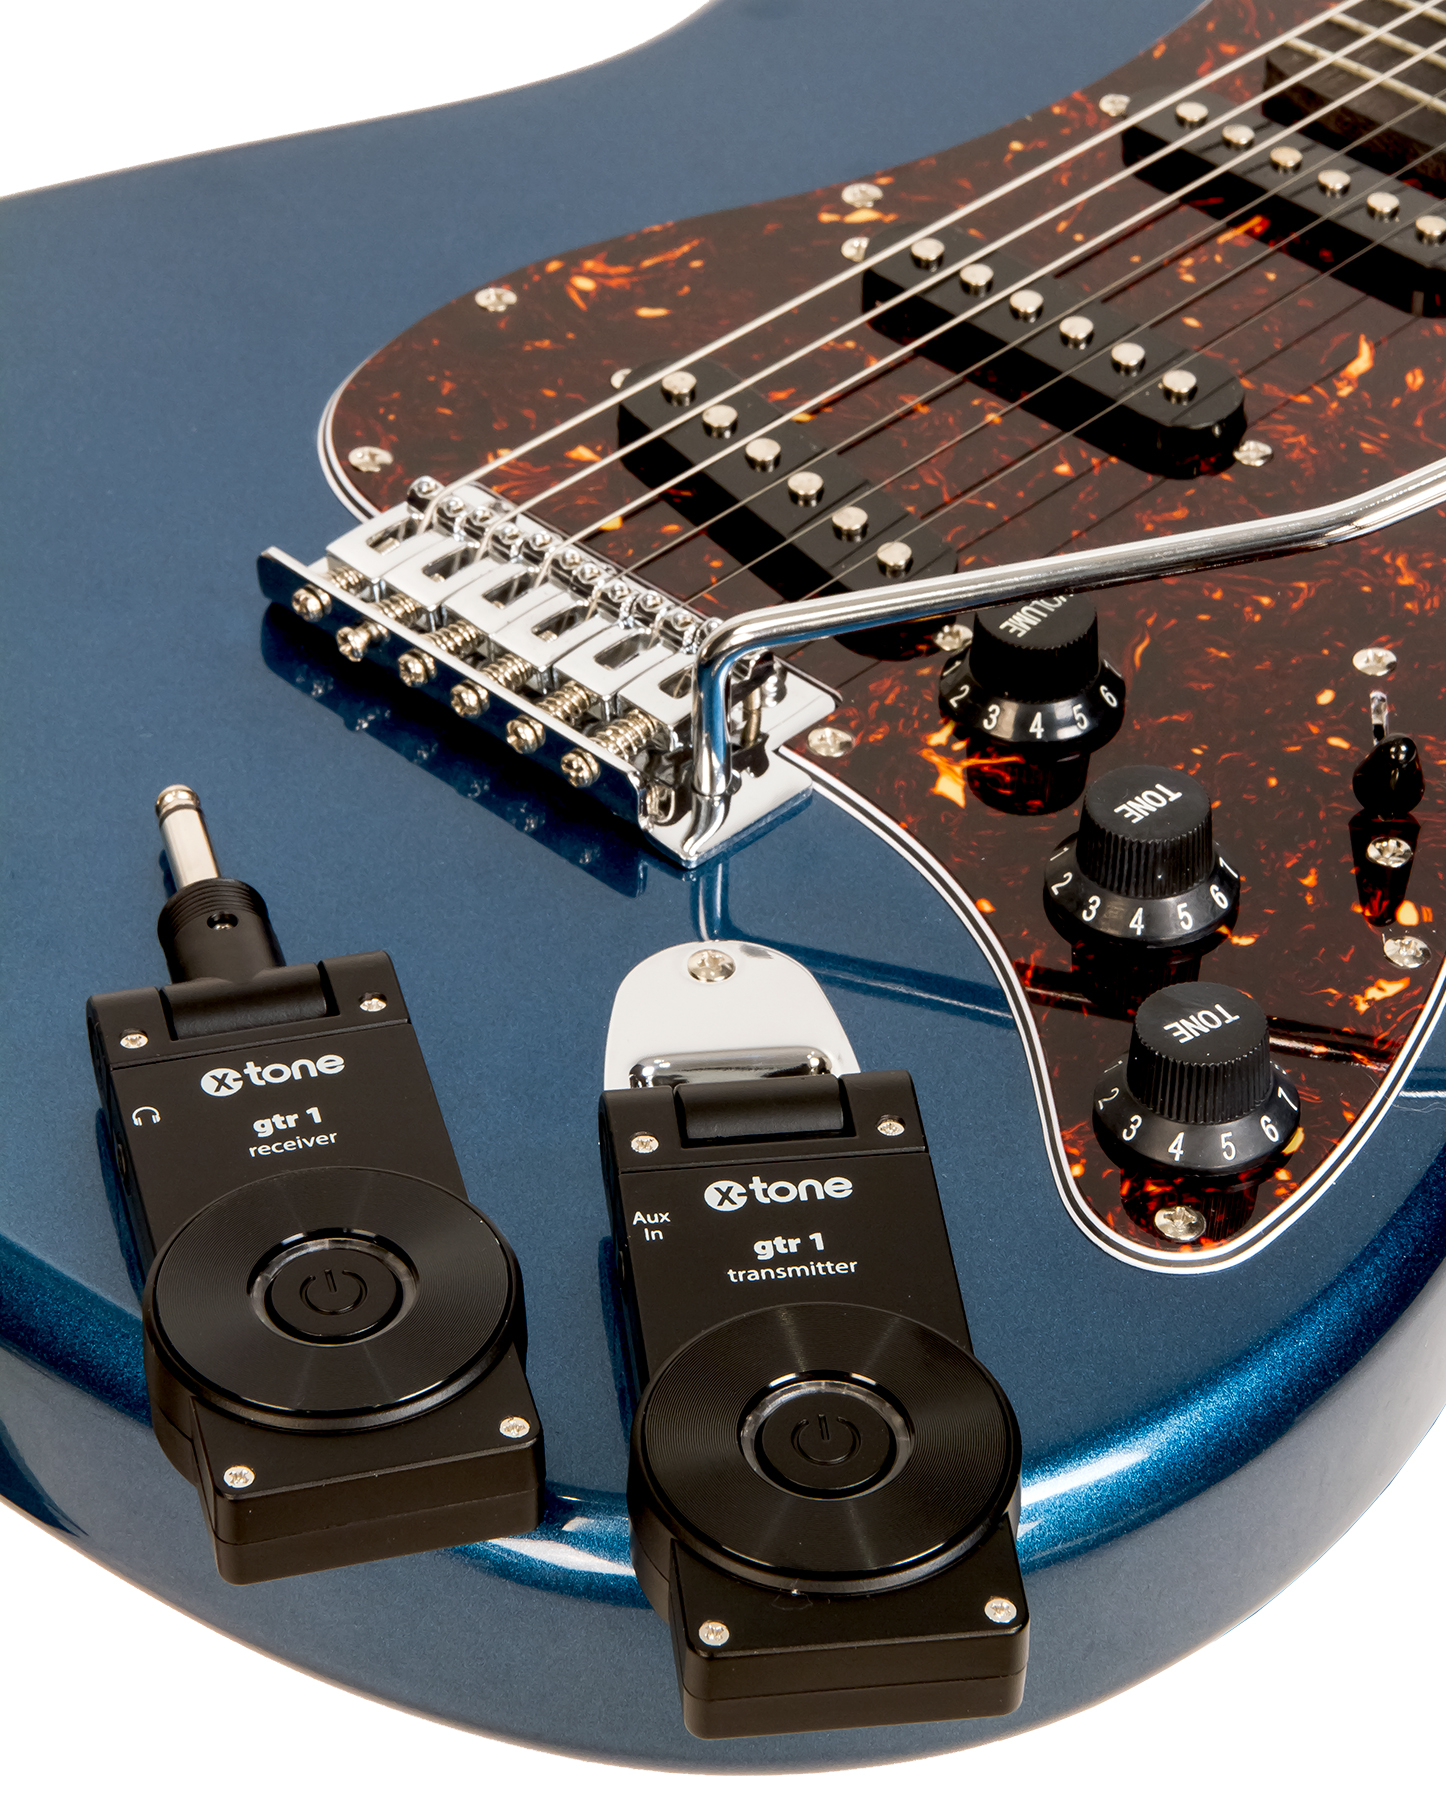 X-tone Gtr-1 - Micro Hf Instruments - Variation 3